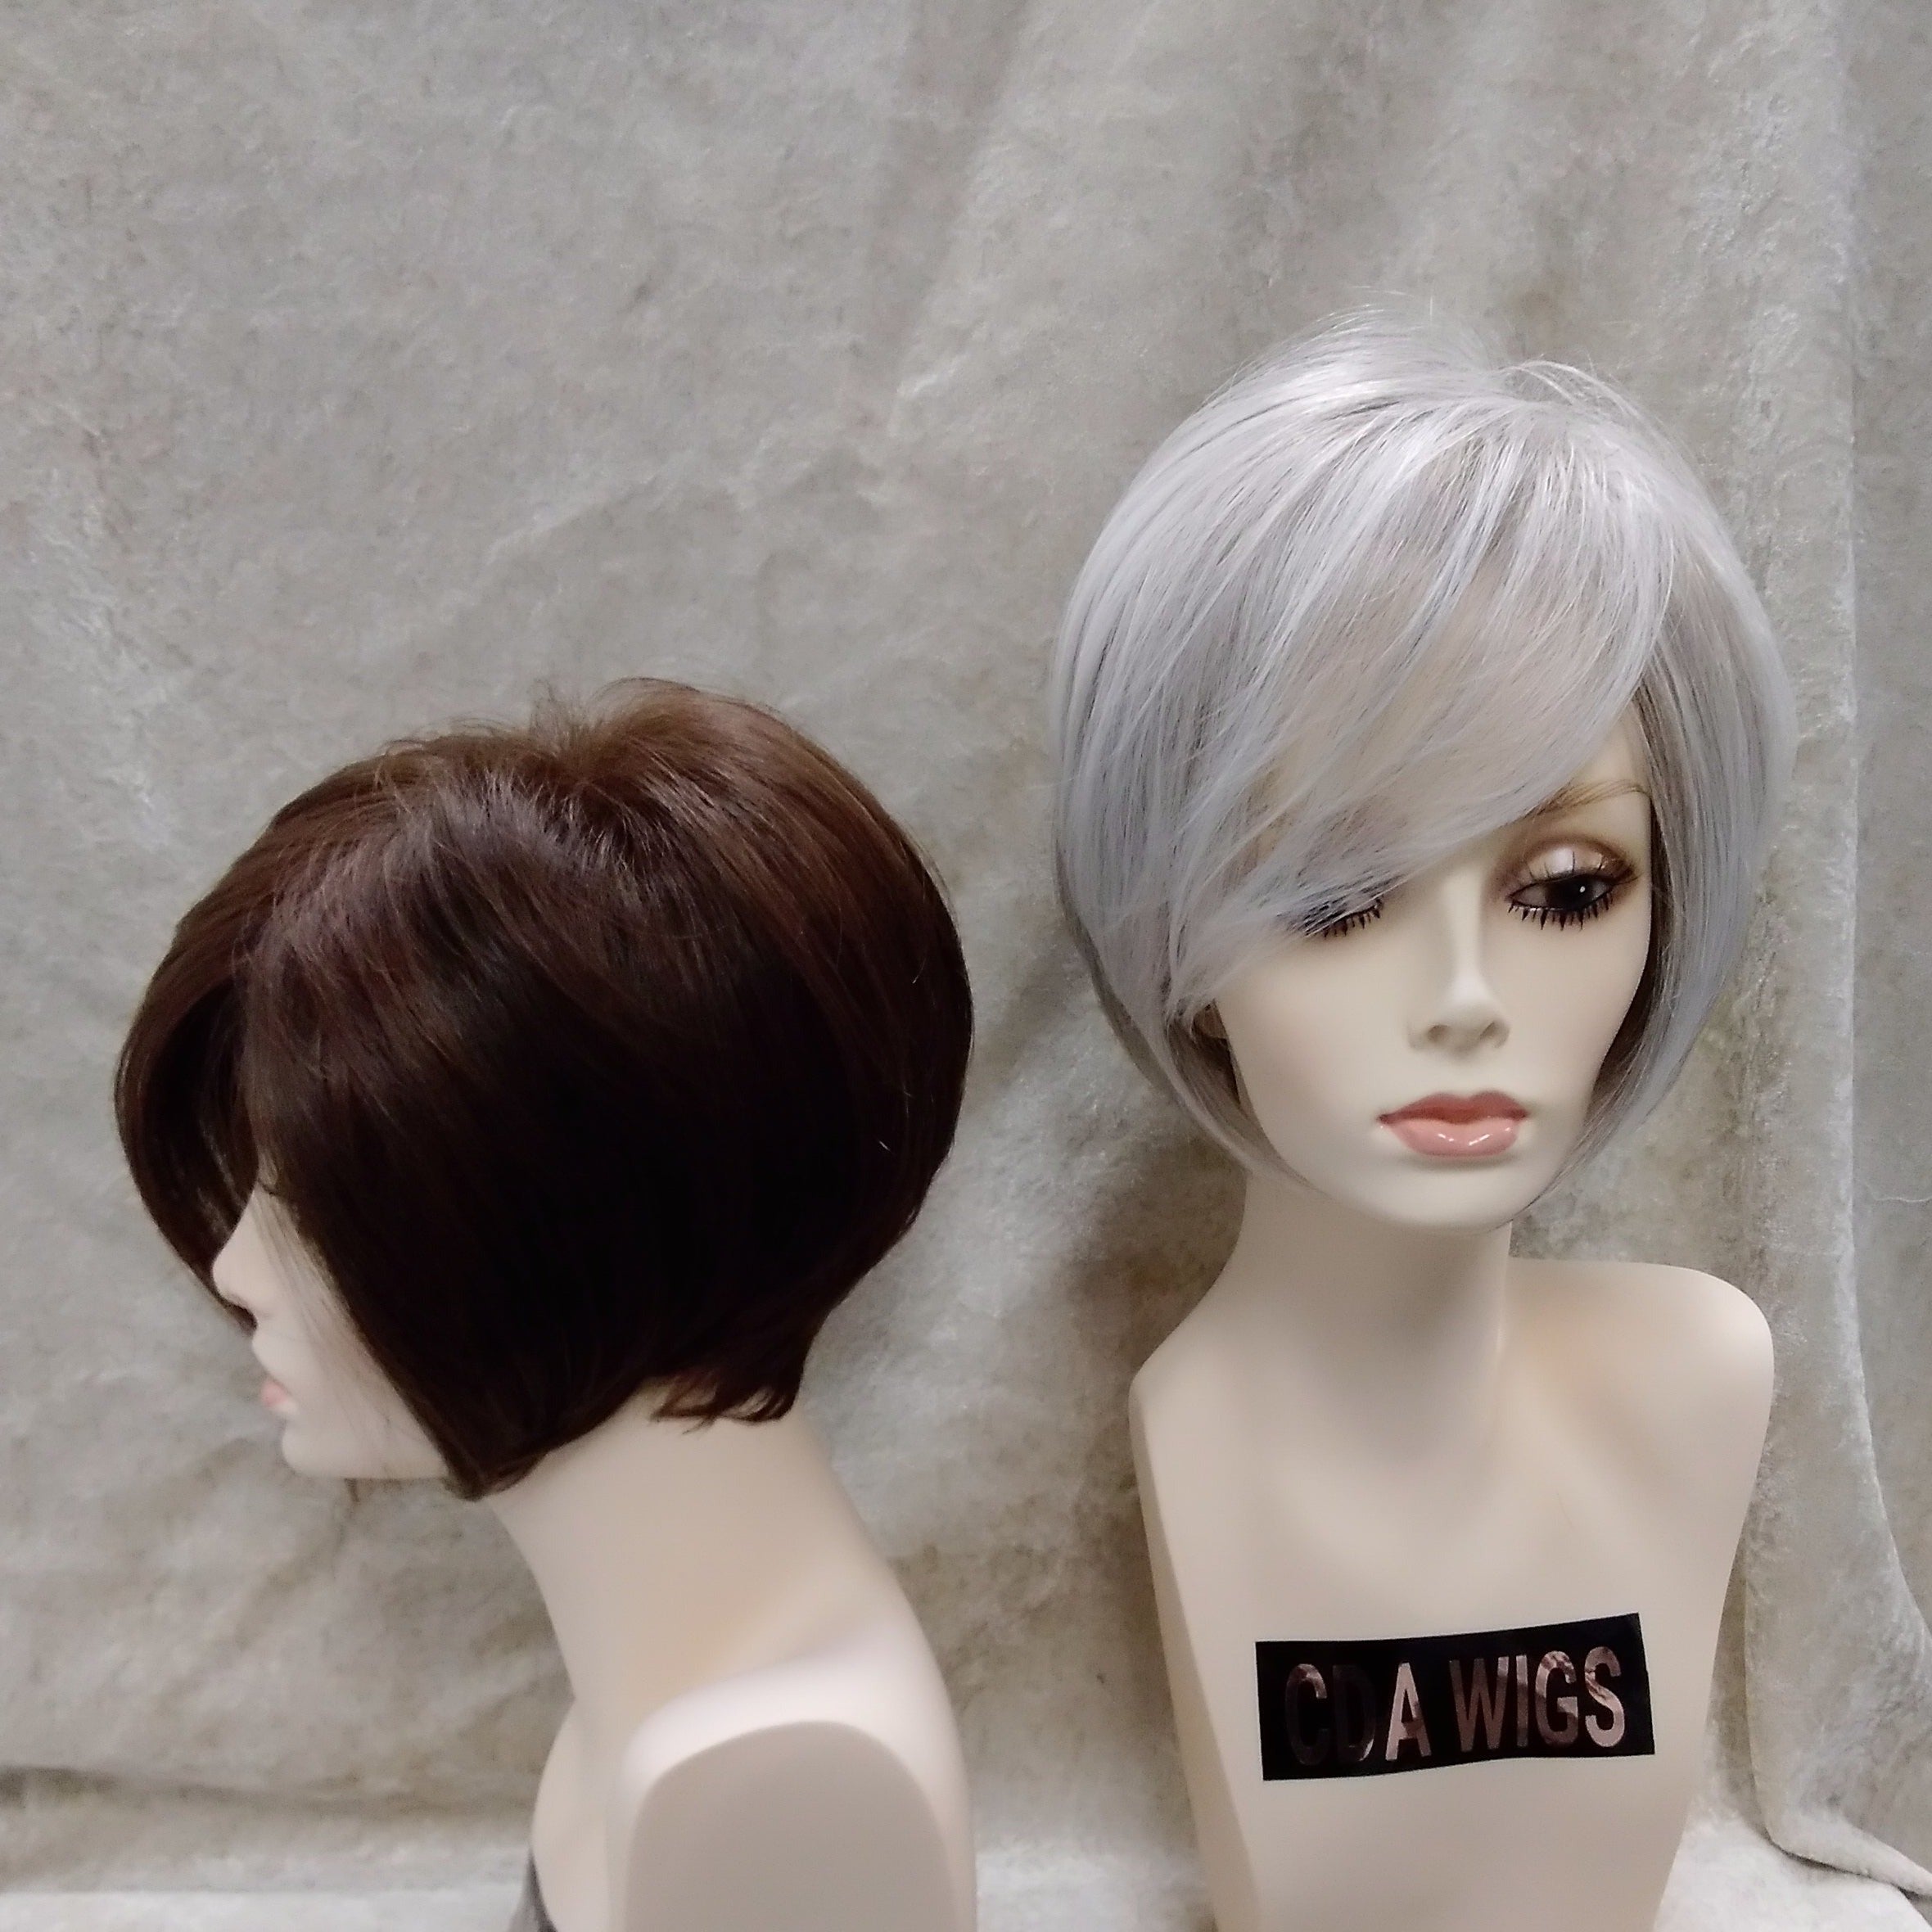 IVY Heat Friendly Lace Front Bob Buy wigs at Coeur d #39 Alene wigs